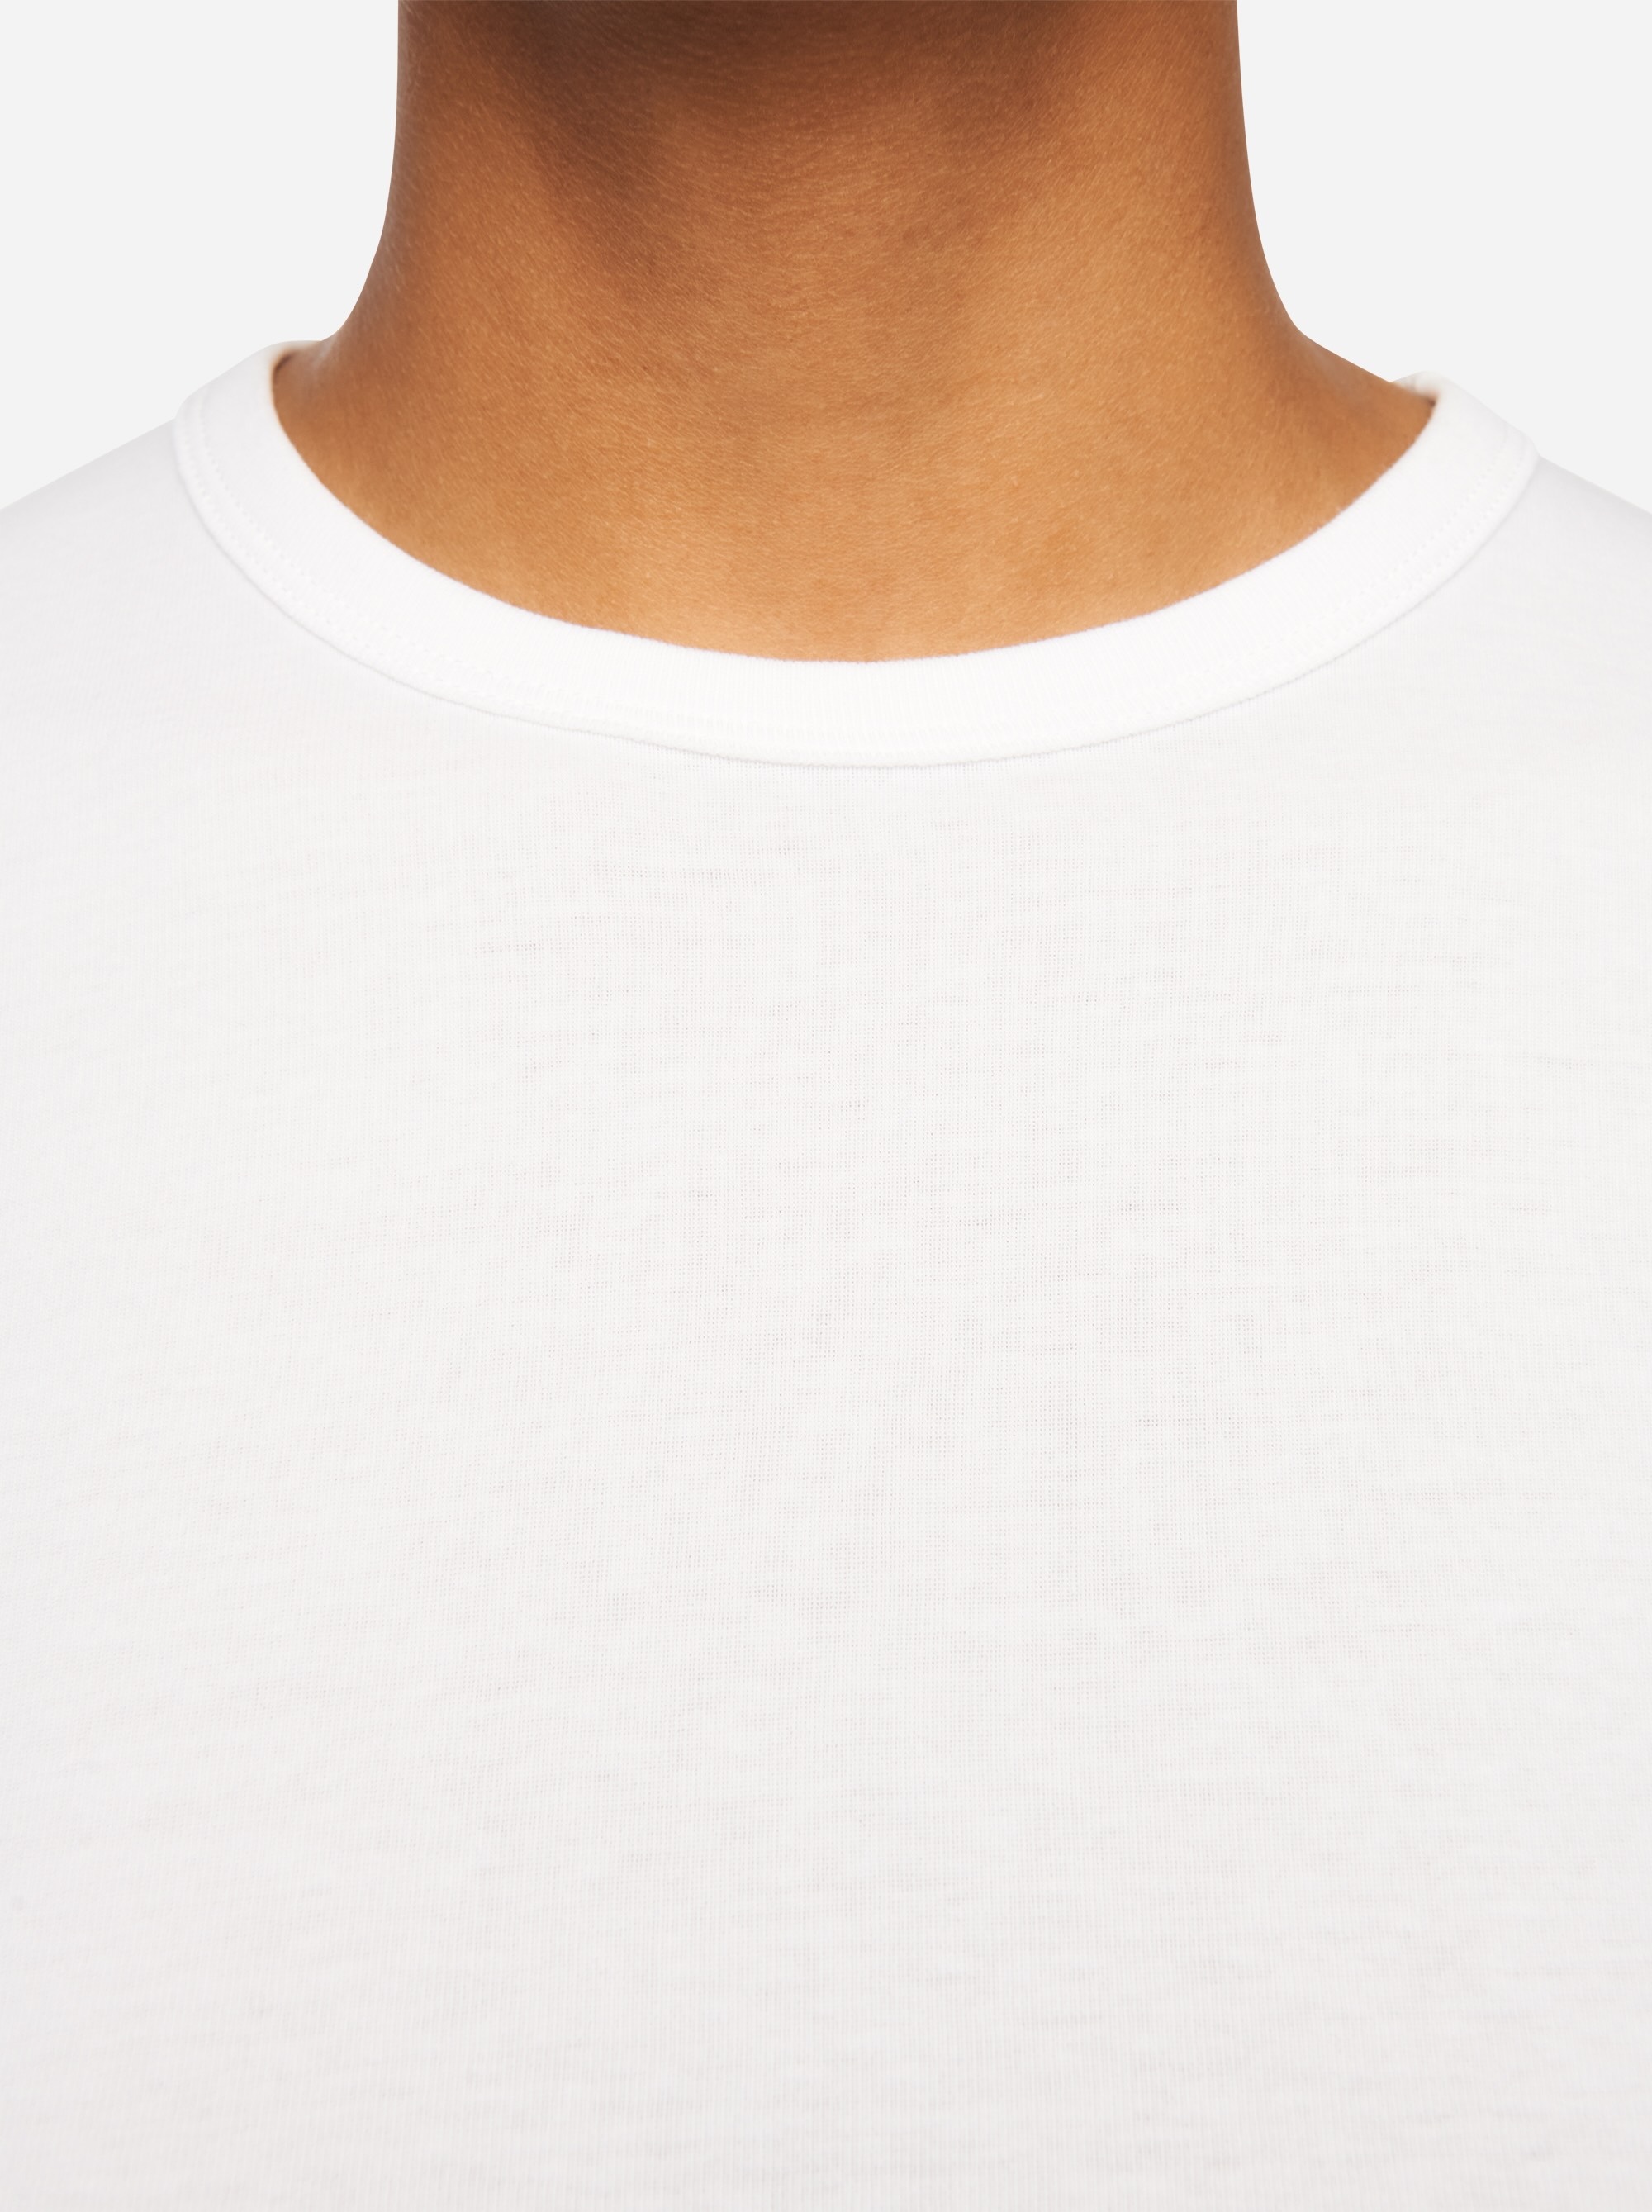 Teym - The T-Shirt - Women - White - 4